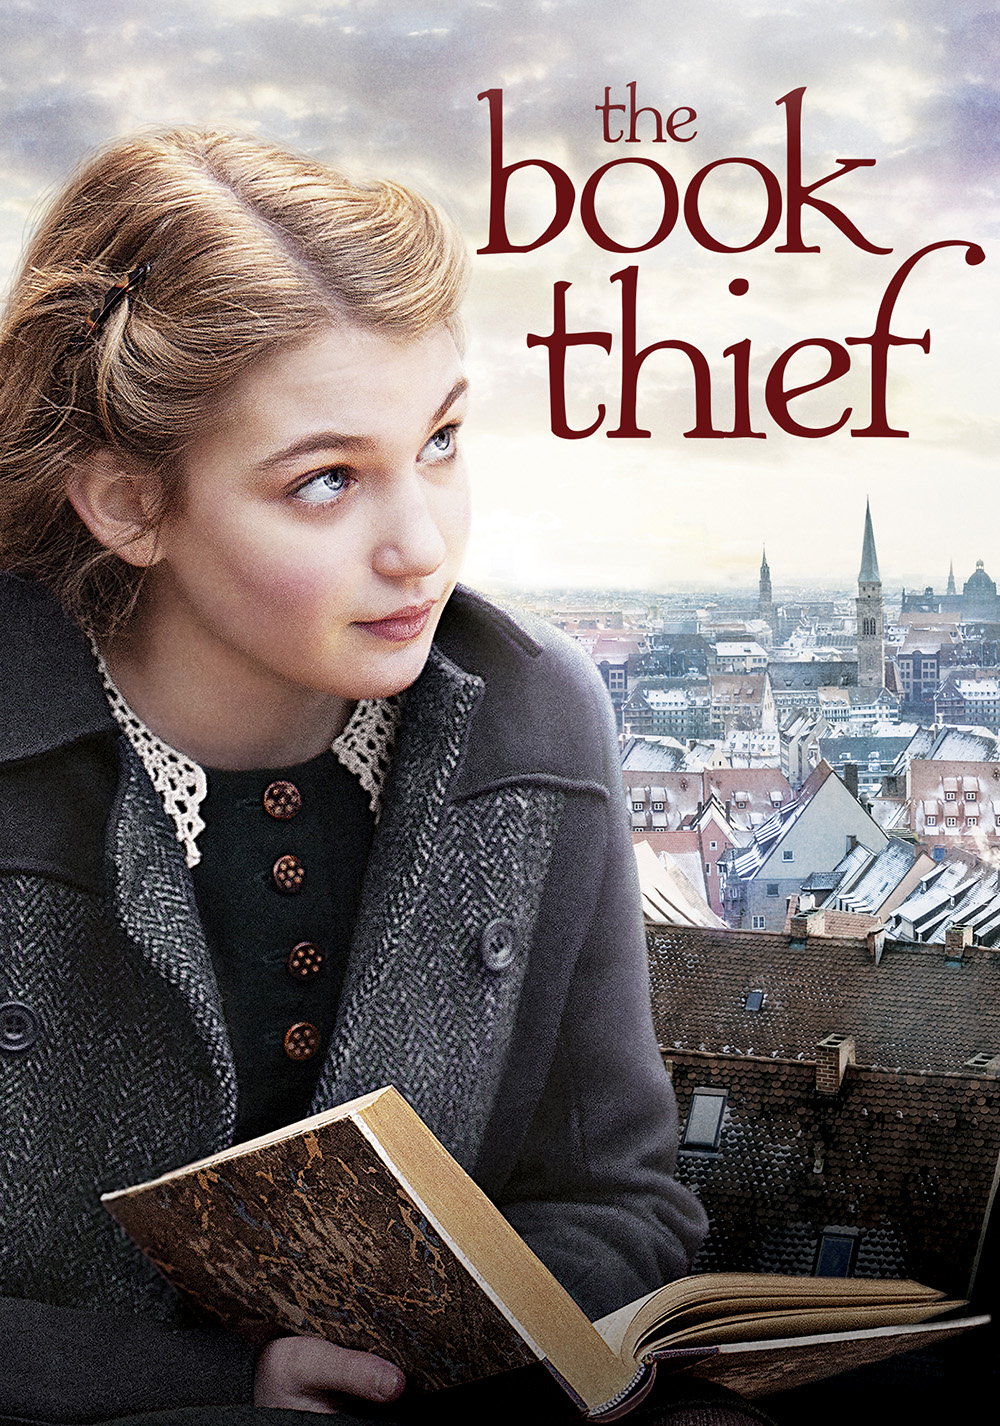 The book thief movie online, free no download